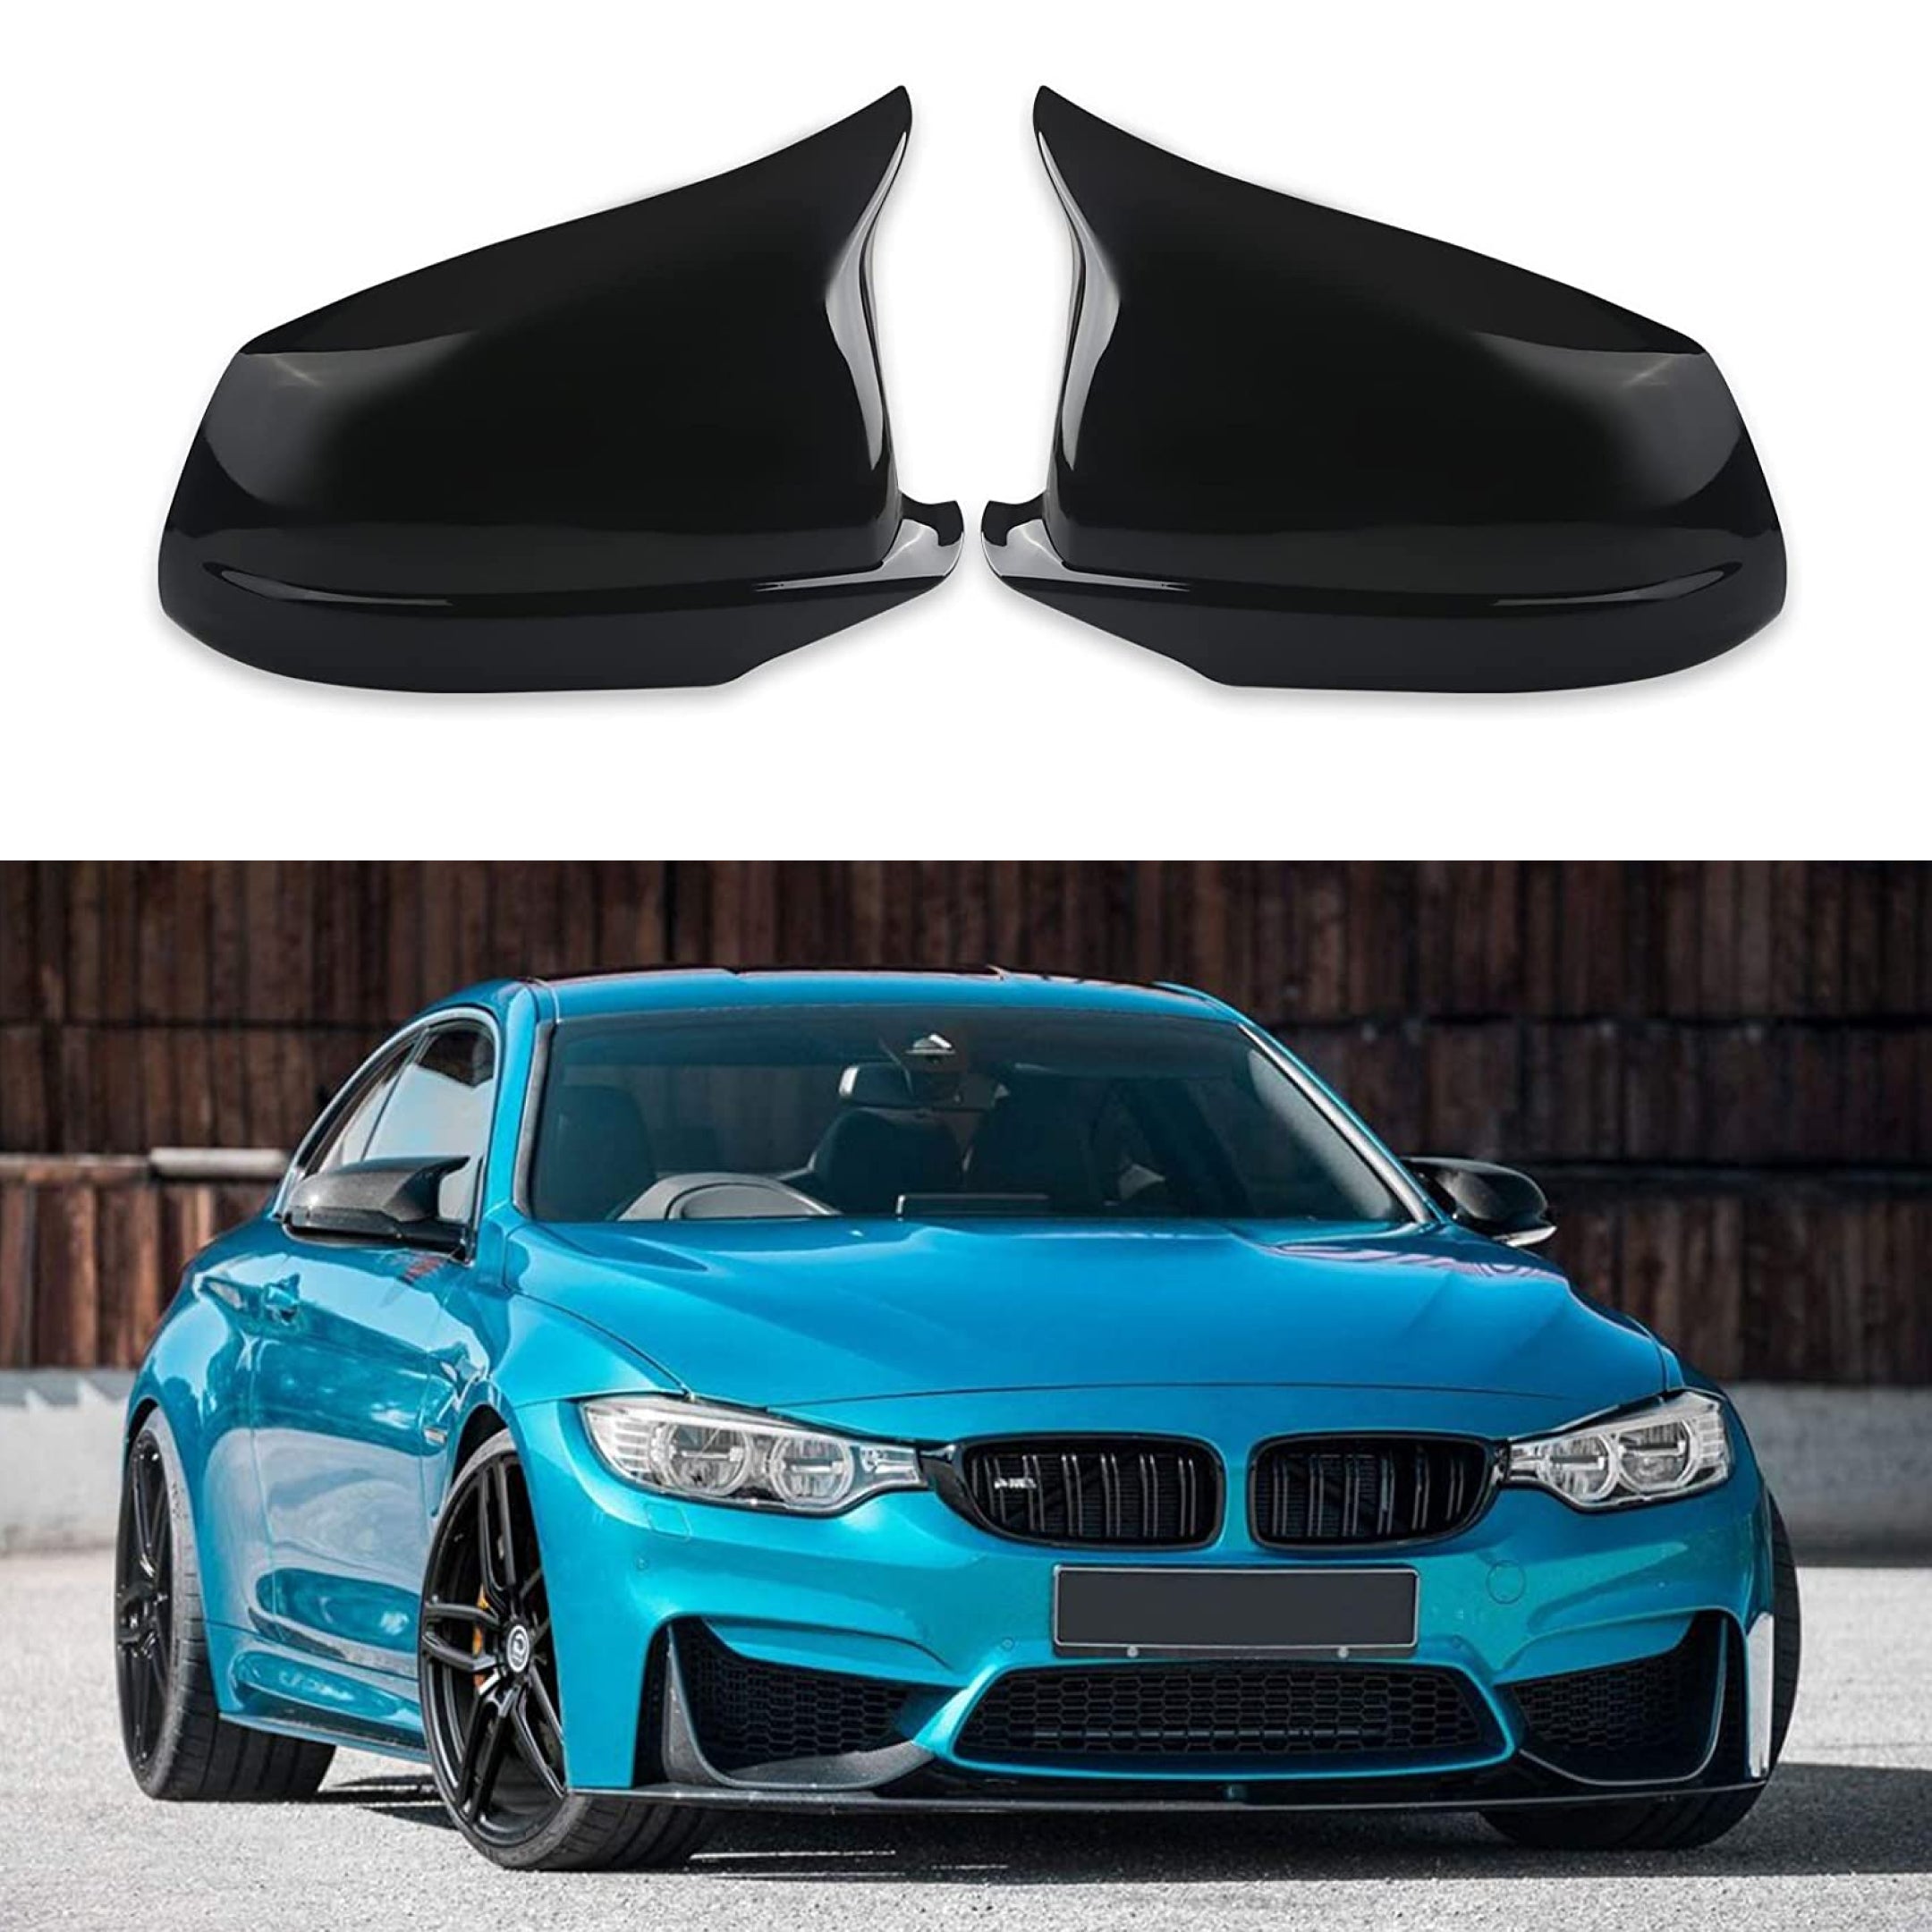 Se adapta a BMW 1/3/4 series M2, tapas de espejo retrovisor lateral estilo bocina (negro brillante)